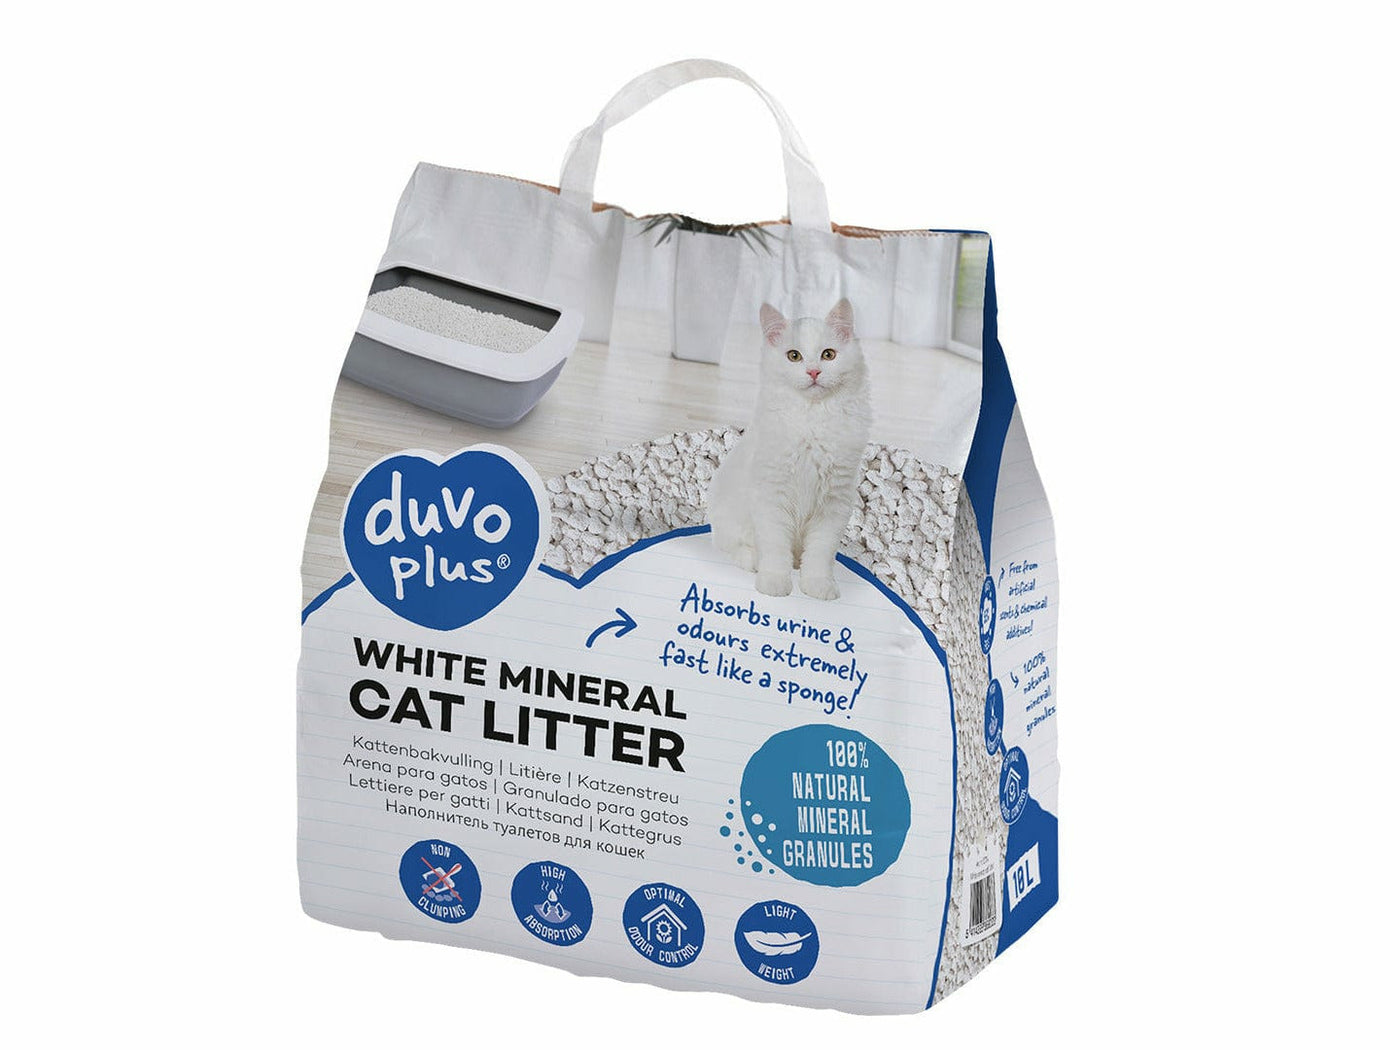 White mineral cat litter 10L